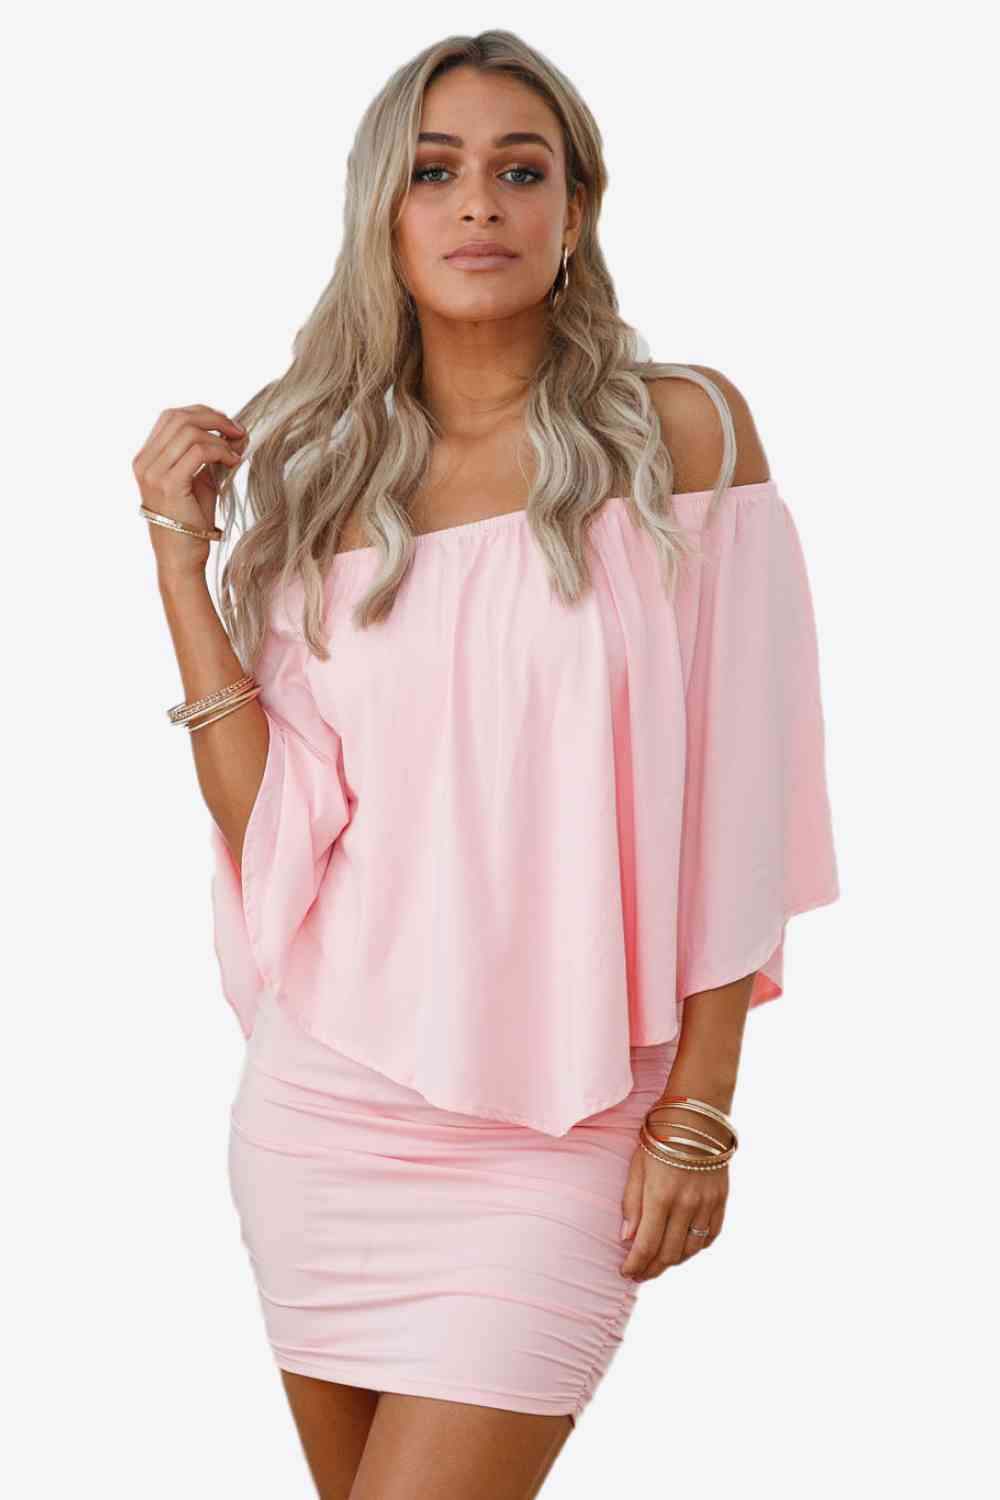 TEEK - Full Size Off-Shoulder Layered Dress DRESS TEEK Trend Blush Pink S 